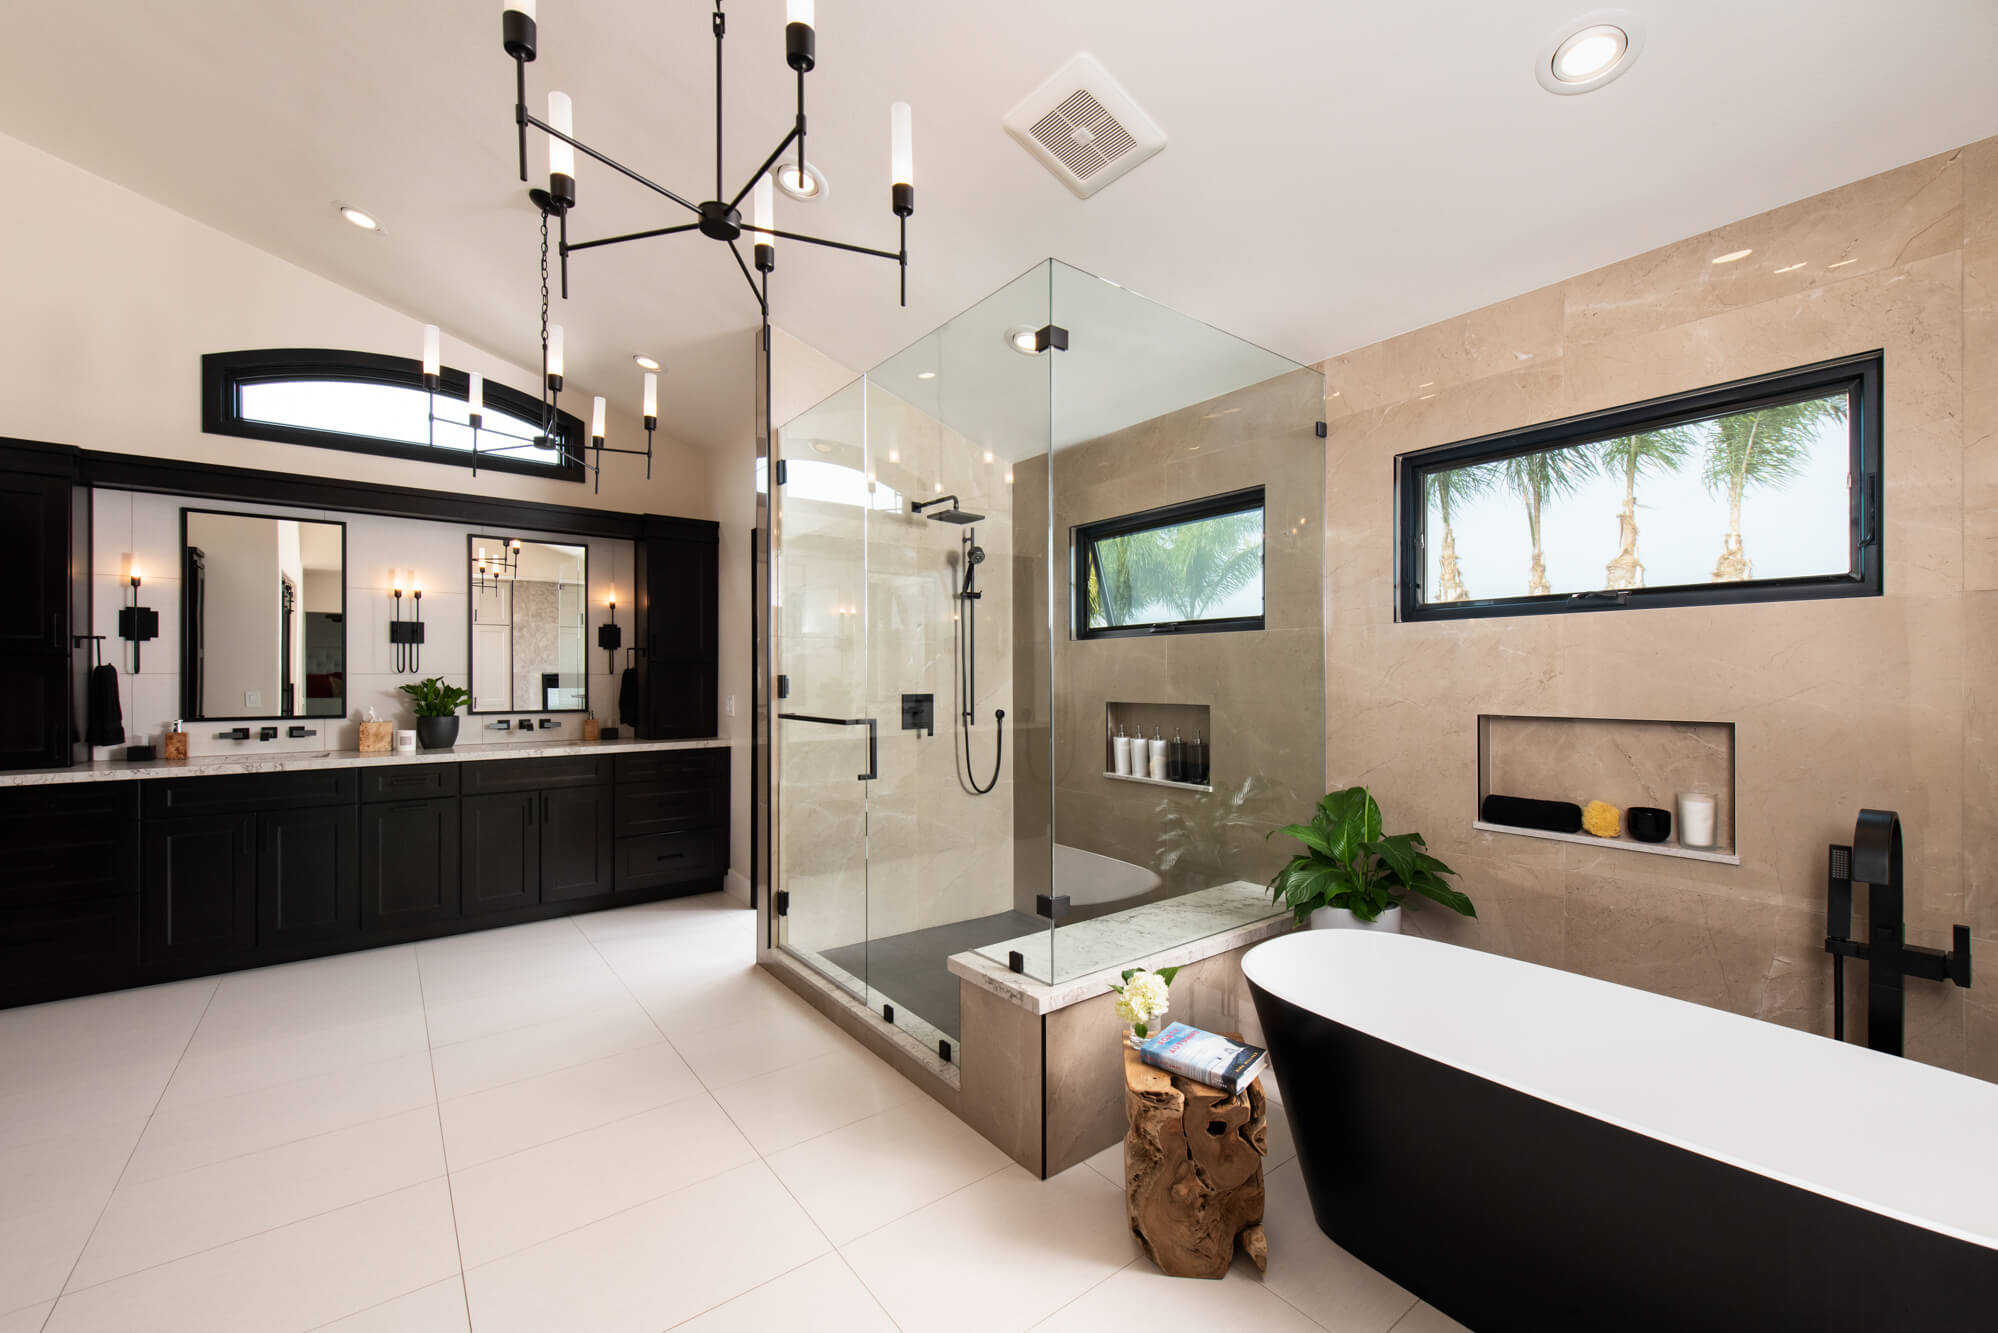 Anaheim Hills master bathroom remodel - spa like bathroom